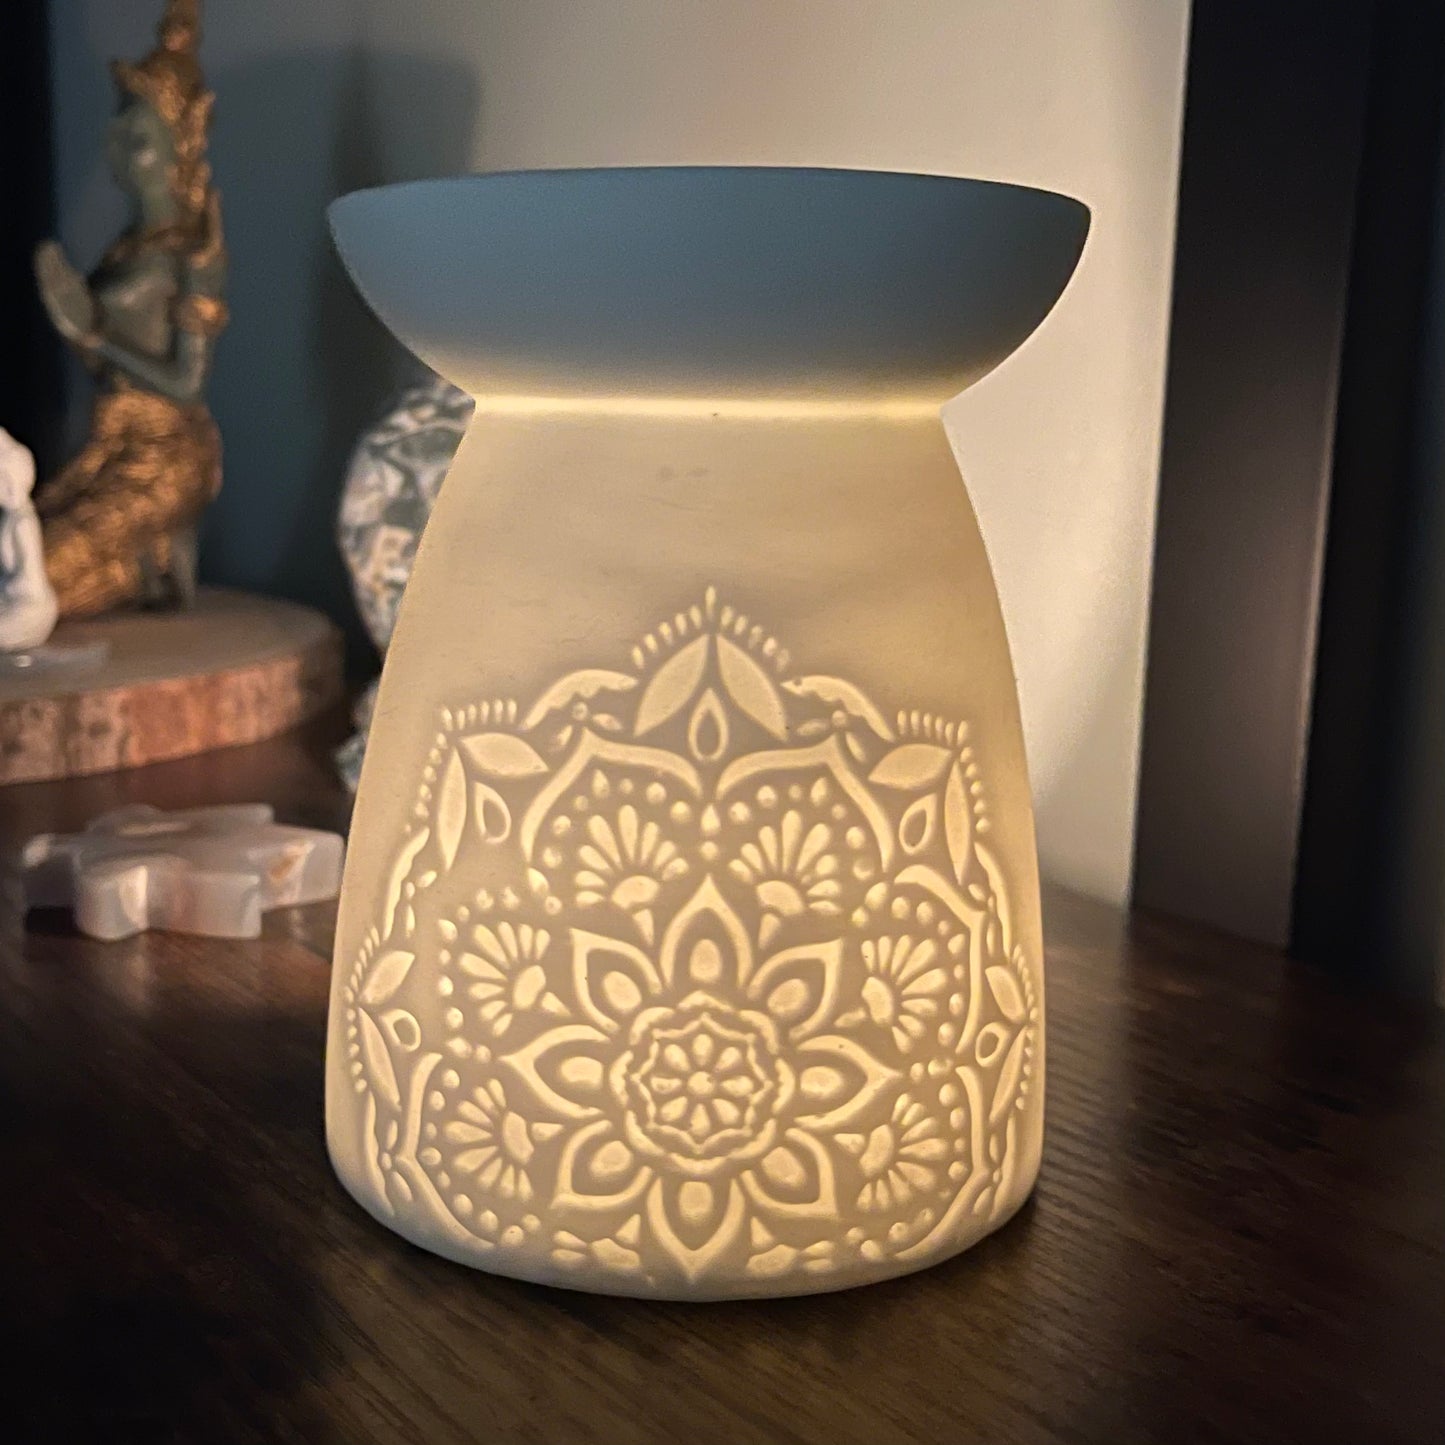 Mandala White ceramic wax / oil burner